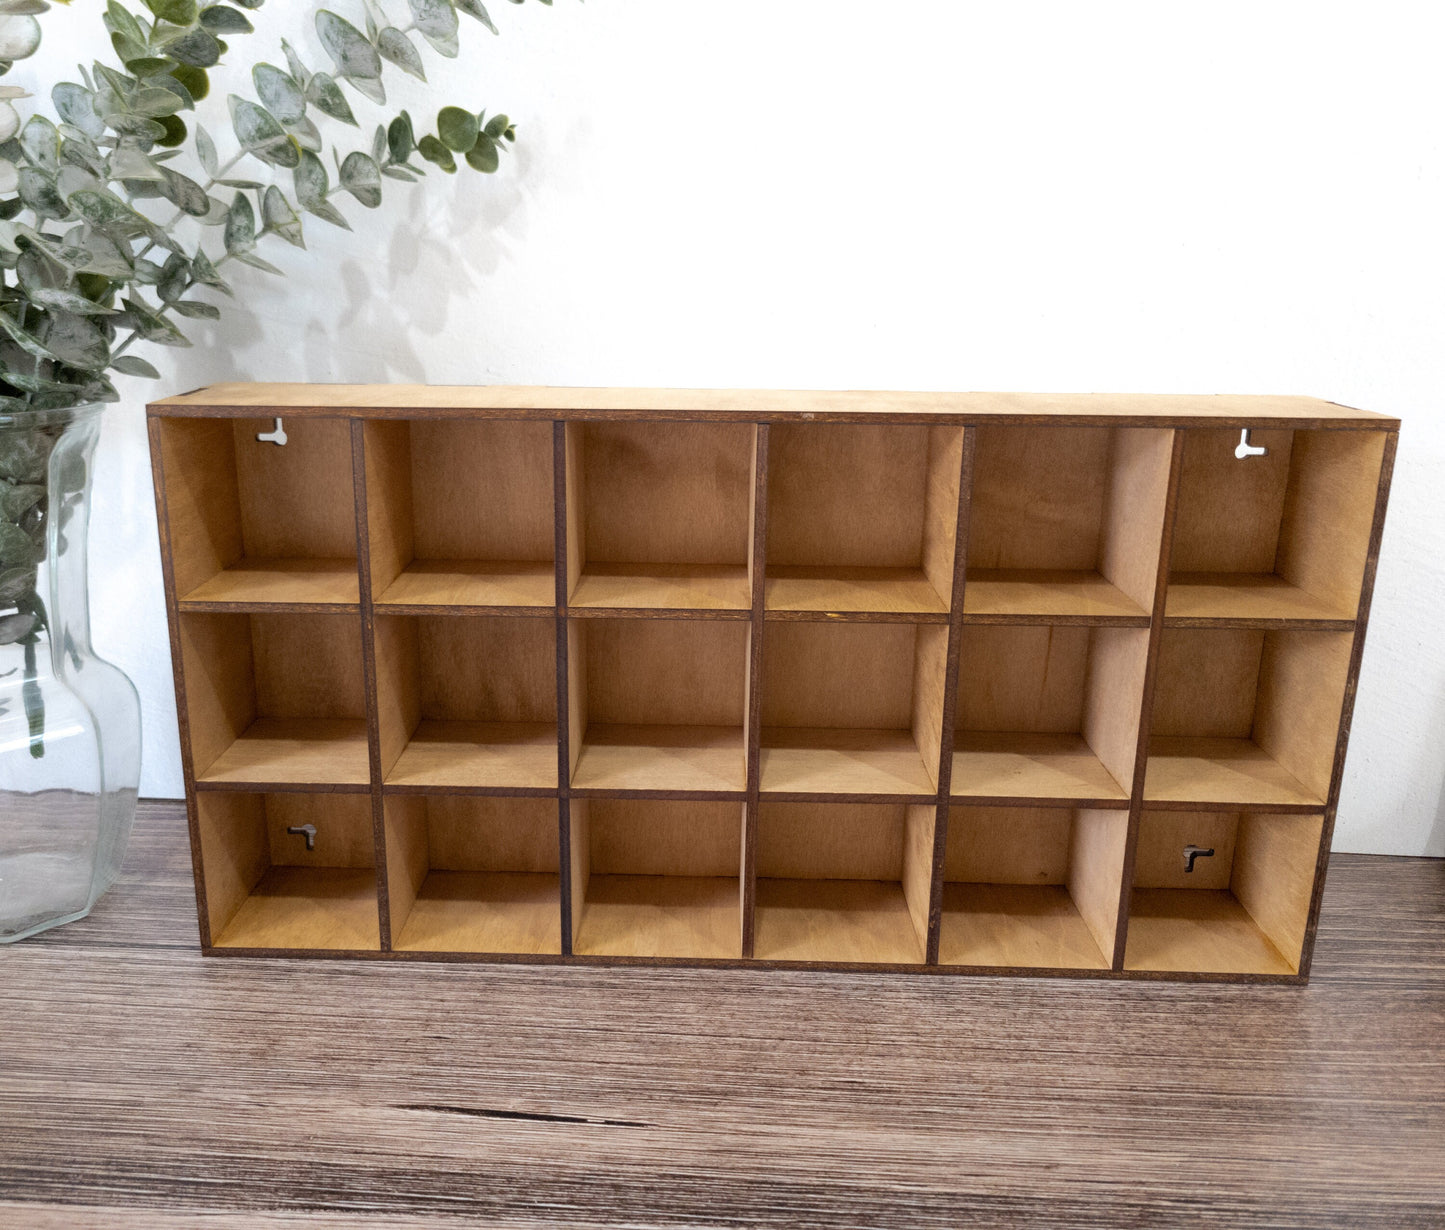 18 Compartment Wooden Display Shelf - Trinket Shelf - Curio Cabinet- Knick Knack Collection Display - Printer Tray -Figure Organizer Display